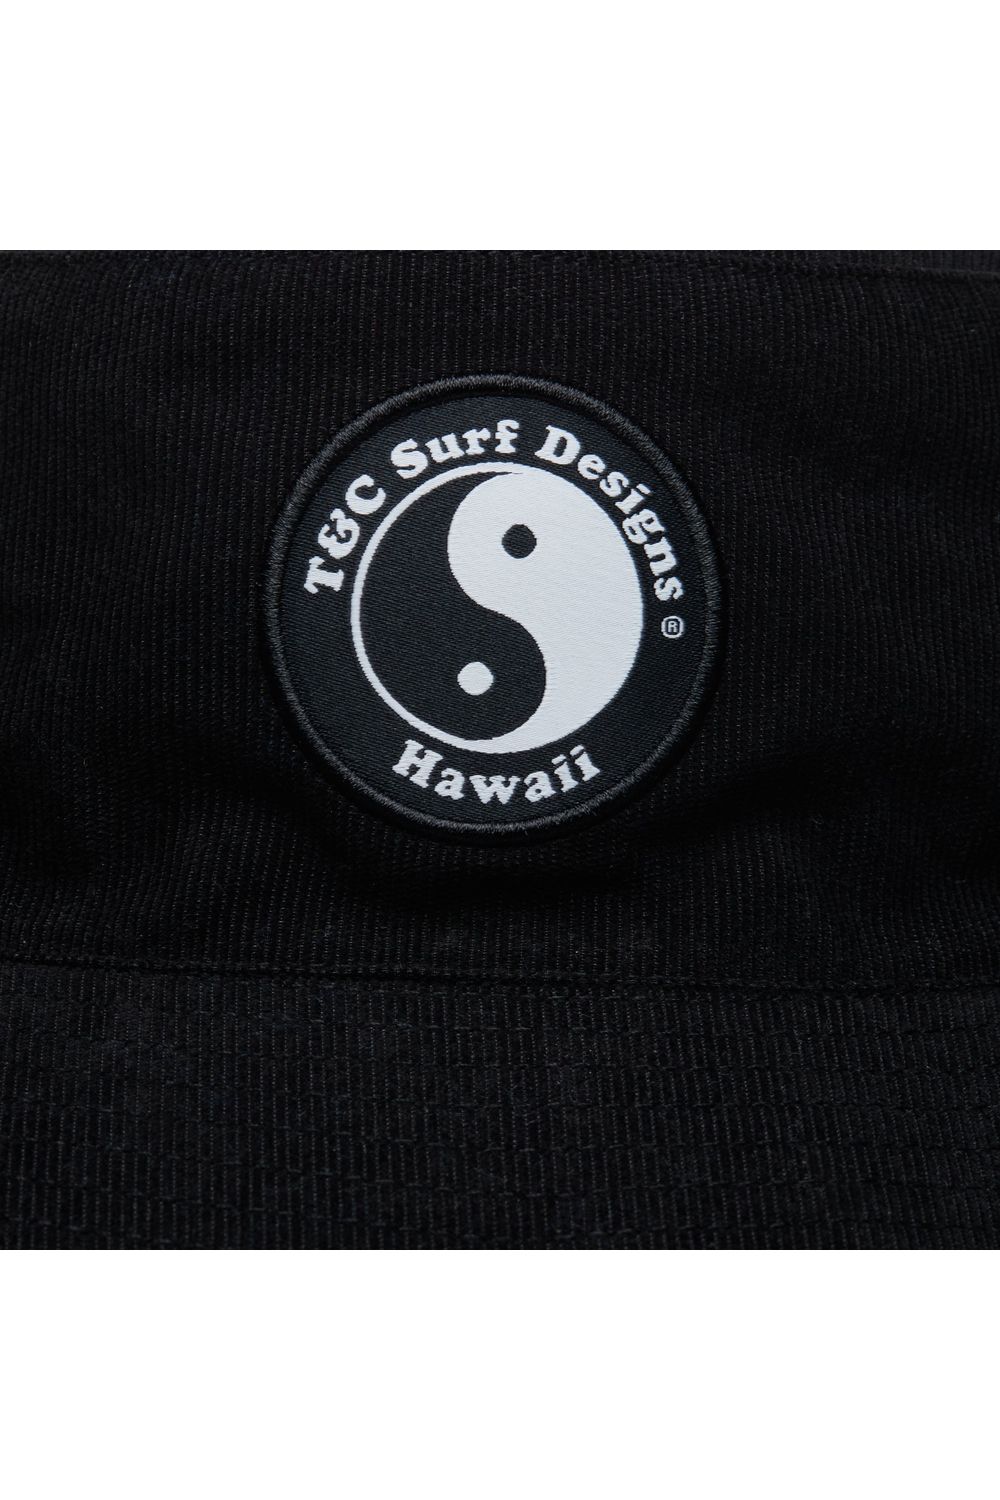 T&C Surf Designs YY Bucket Hat Black